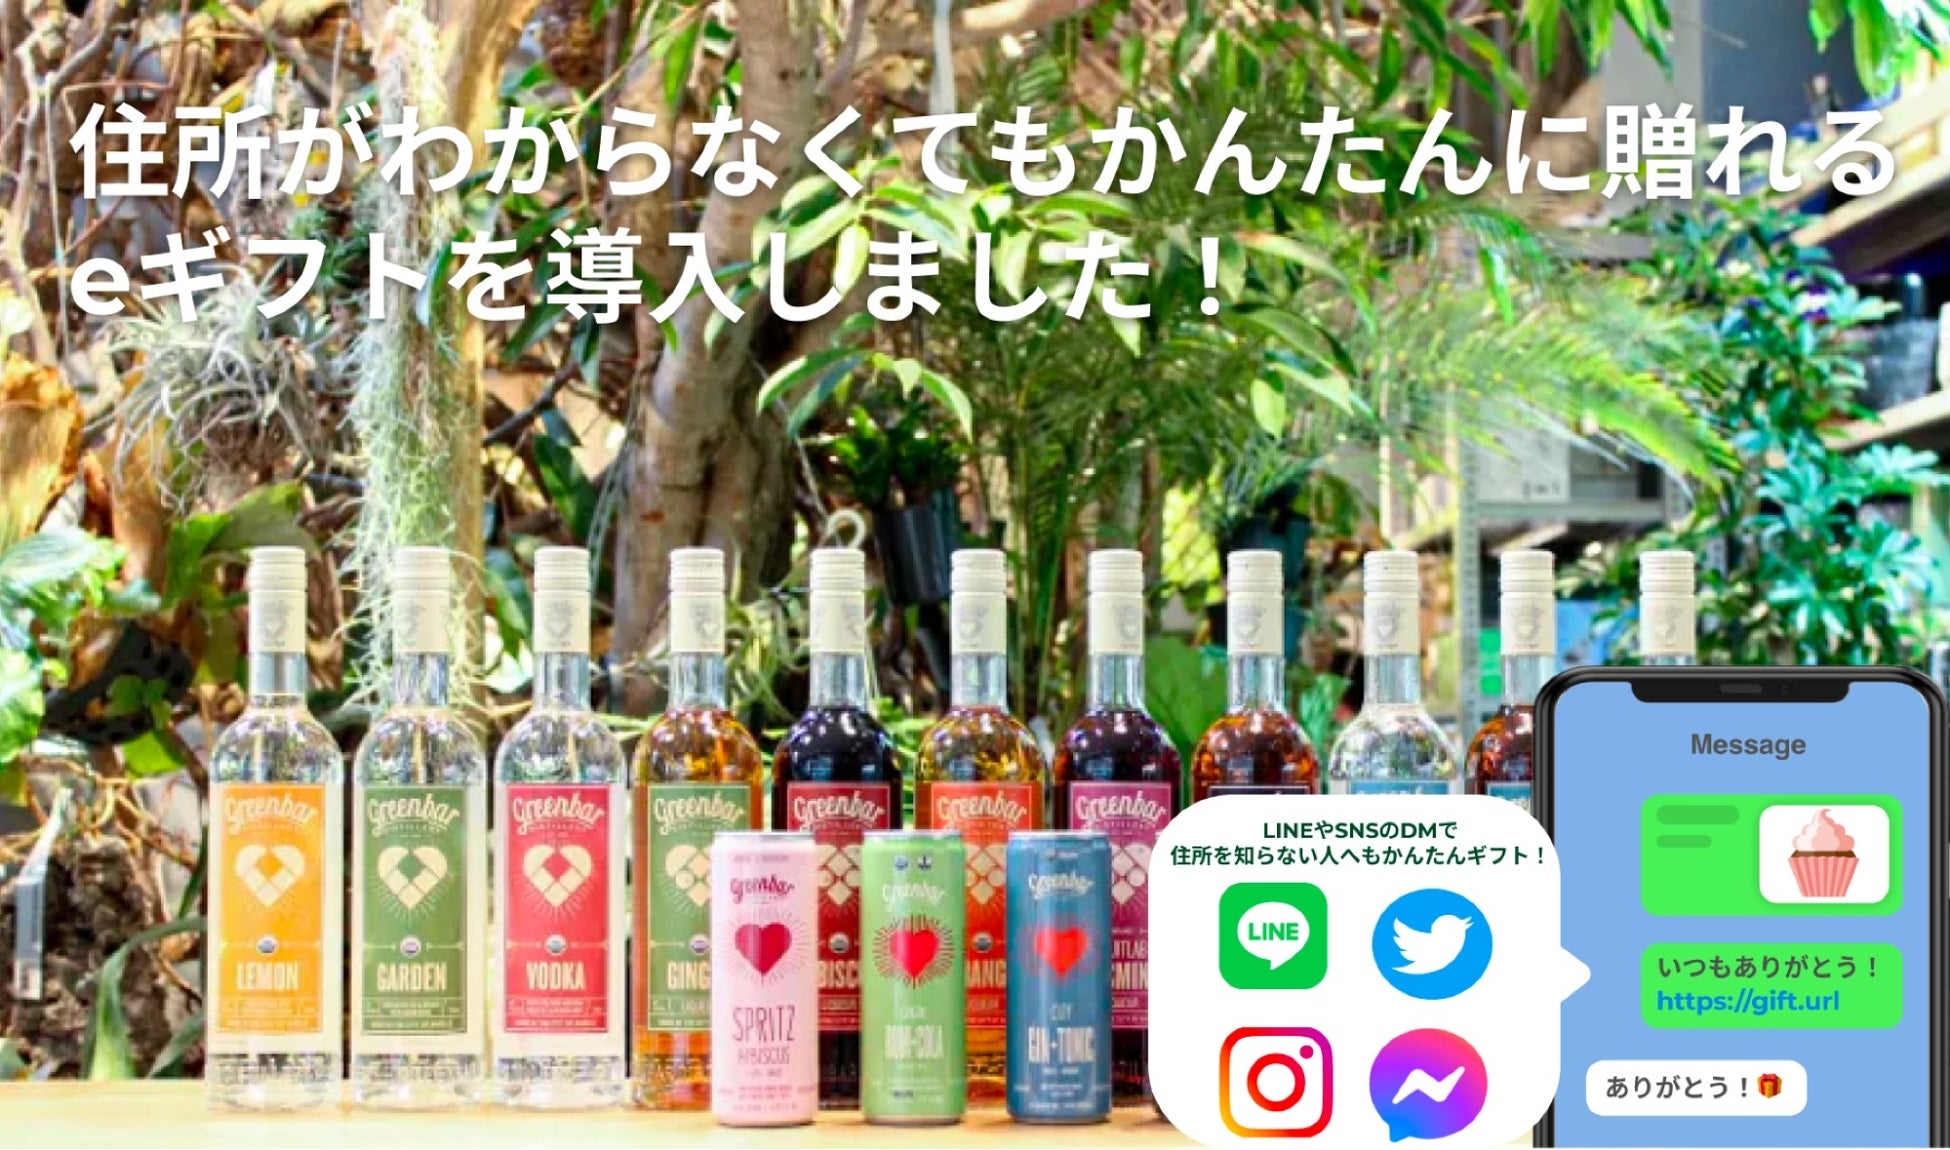 Shopifyアプリ「Allingift」が、飲めば飲むほど緑が増える「緑と共生するやさしいお酒」がコンセプトの『オーガニック蒸留酒Greenbar』公式オンラインショップにて採用のサブ画像1